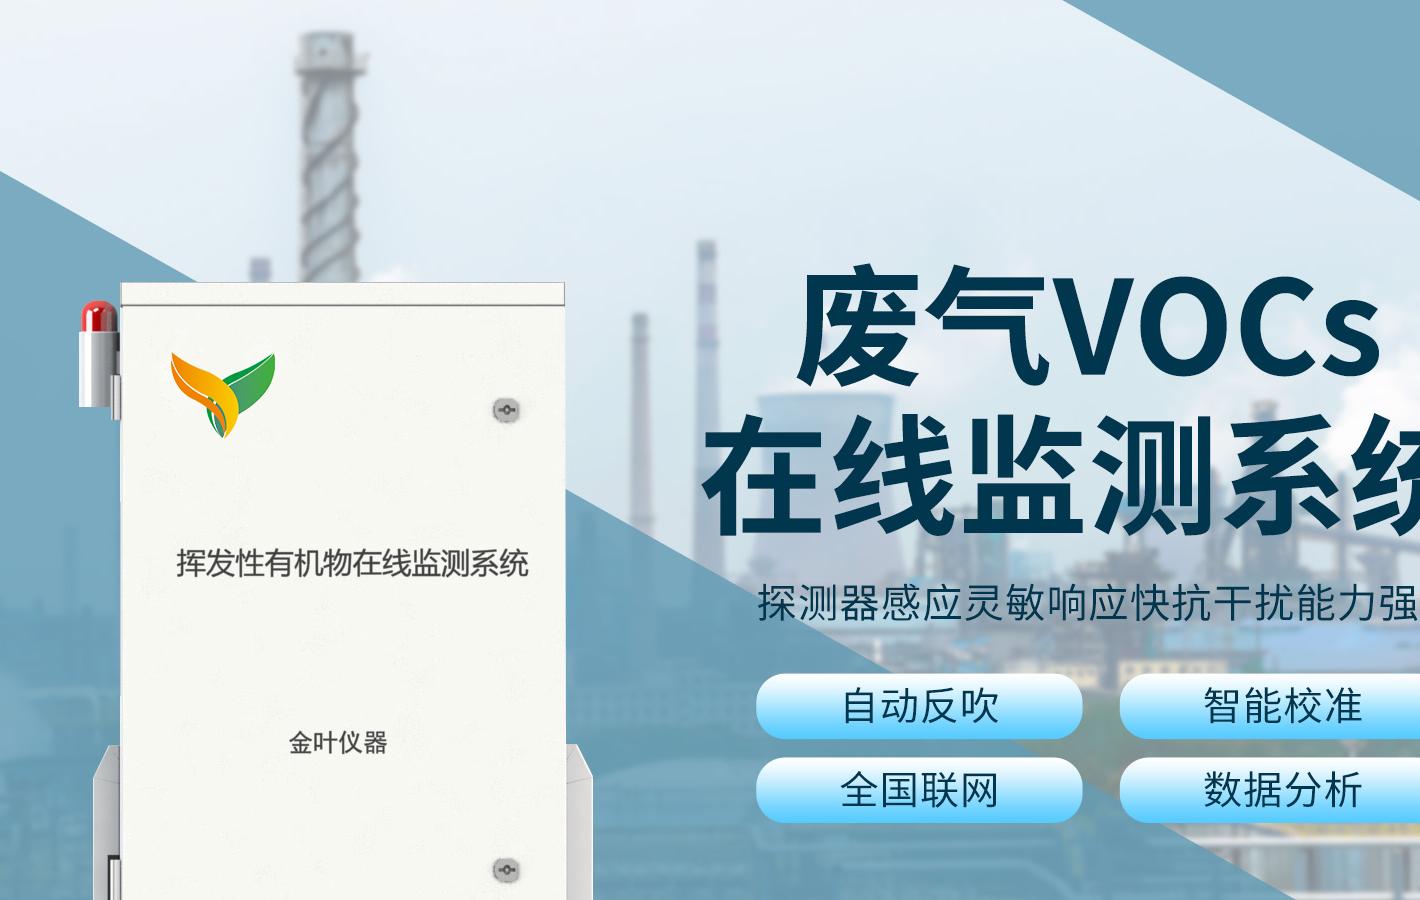 vocs在线监测系统助力环保